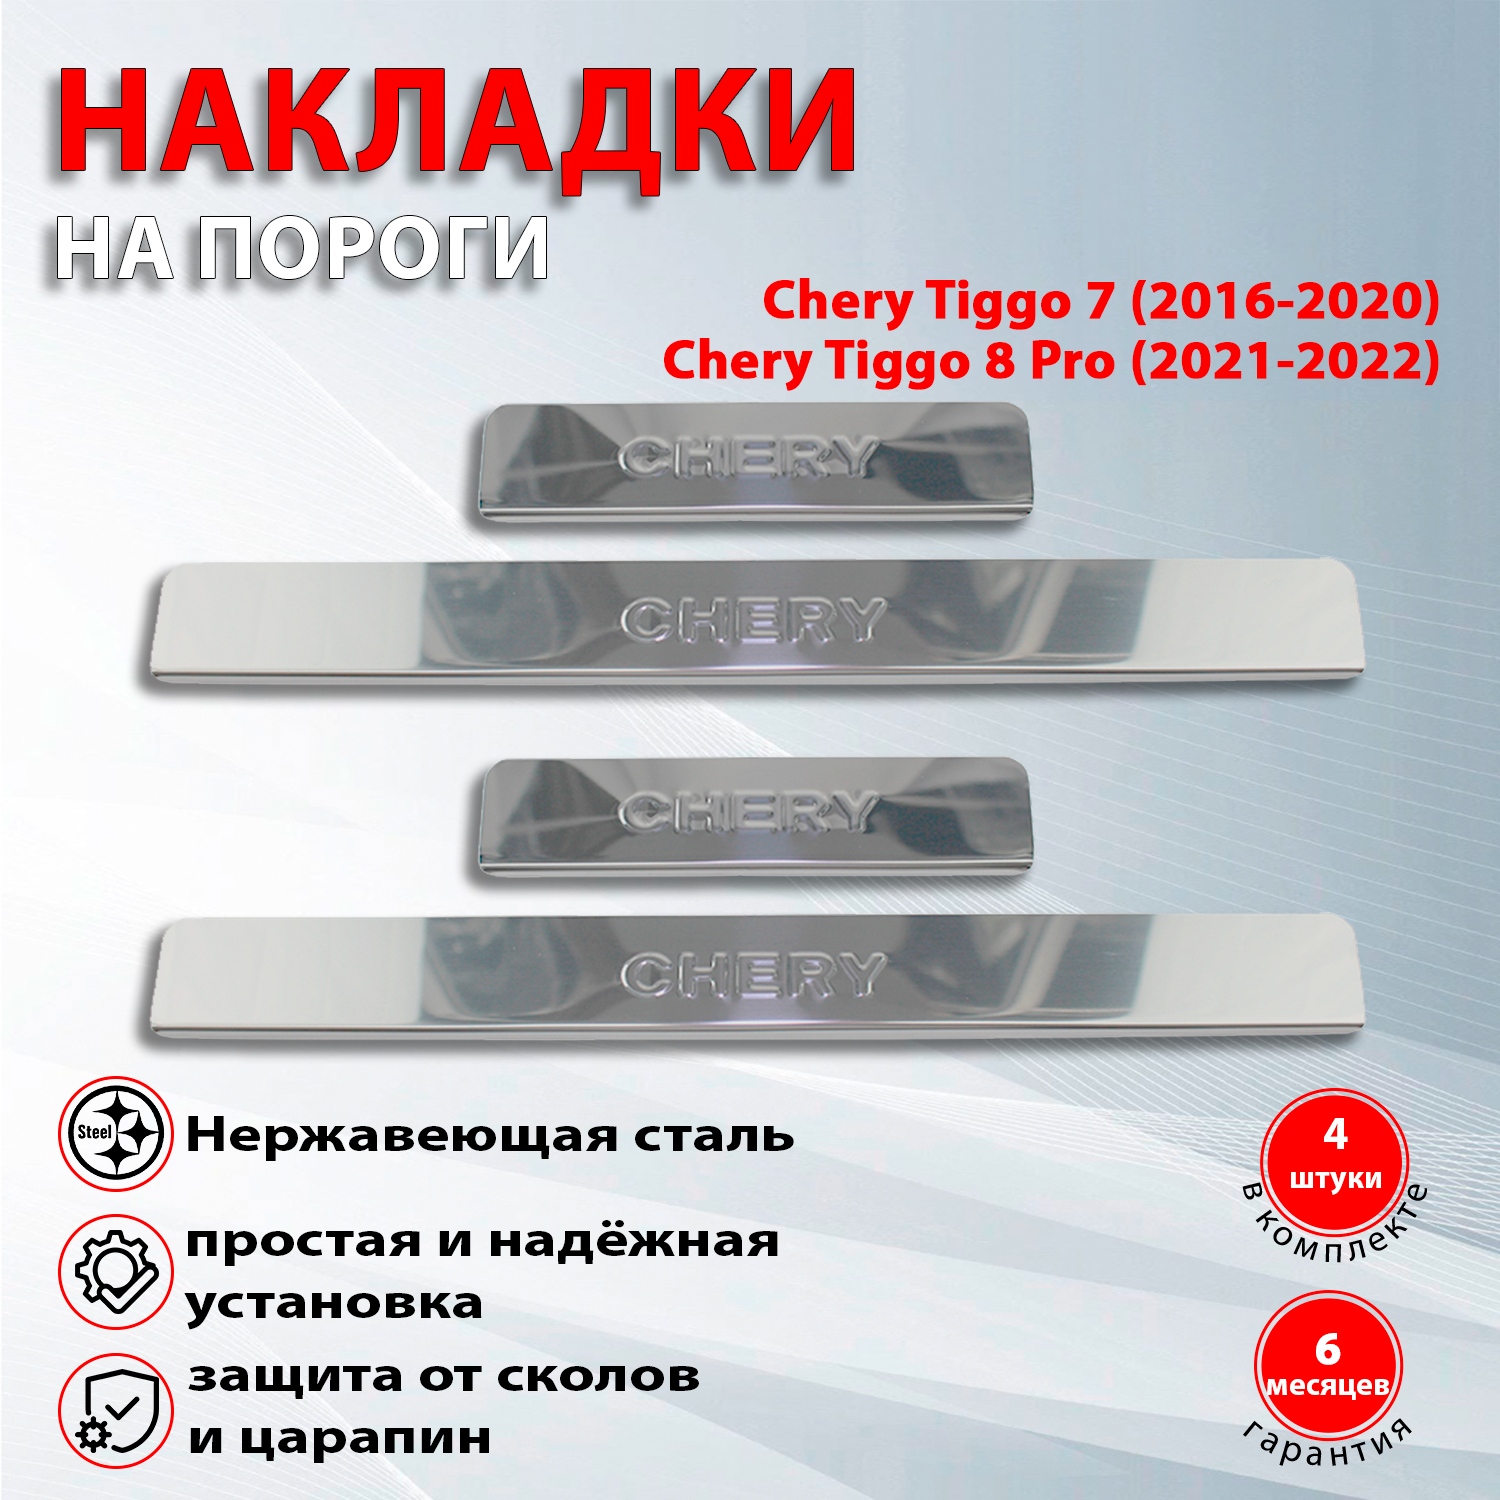 Накладки на пороги Чери Тигго 7 / Chery Tiggo 7 (2016-2020), Чери Тигго 8 Pro / Chery Tiggo 8 Pro (2021-2022)